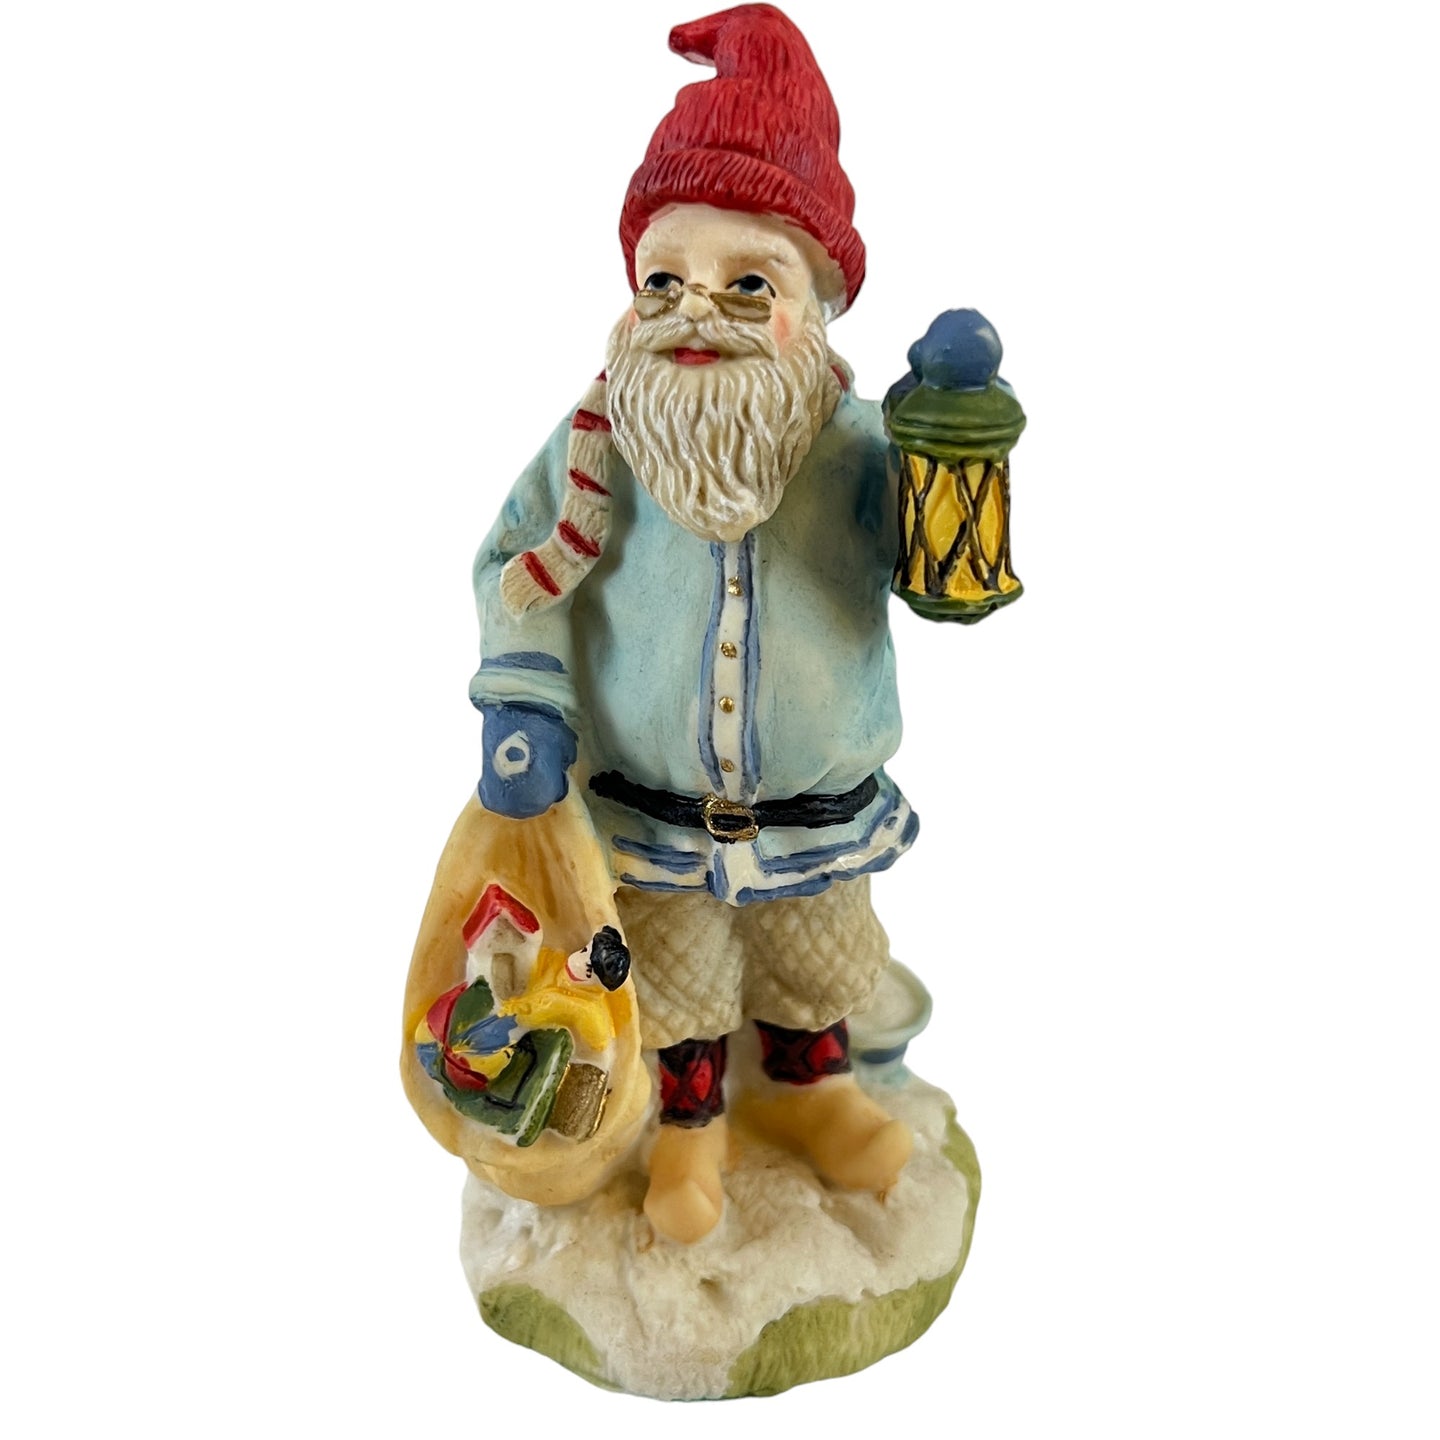 The International Santa Claus Collection Julenisse Scandinavia Christmas Figurine 1992